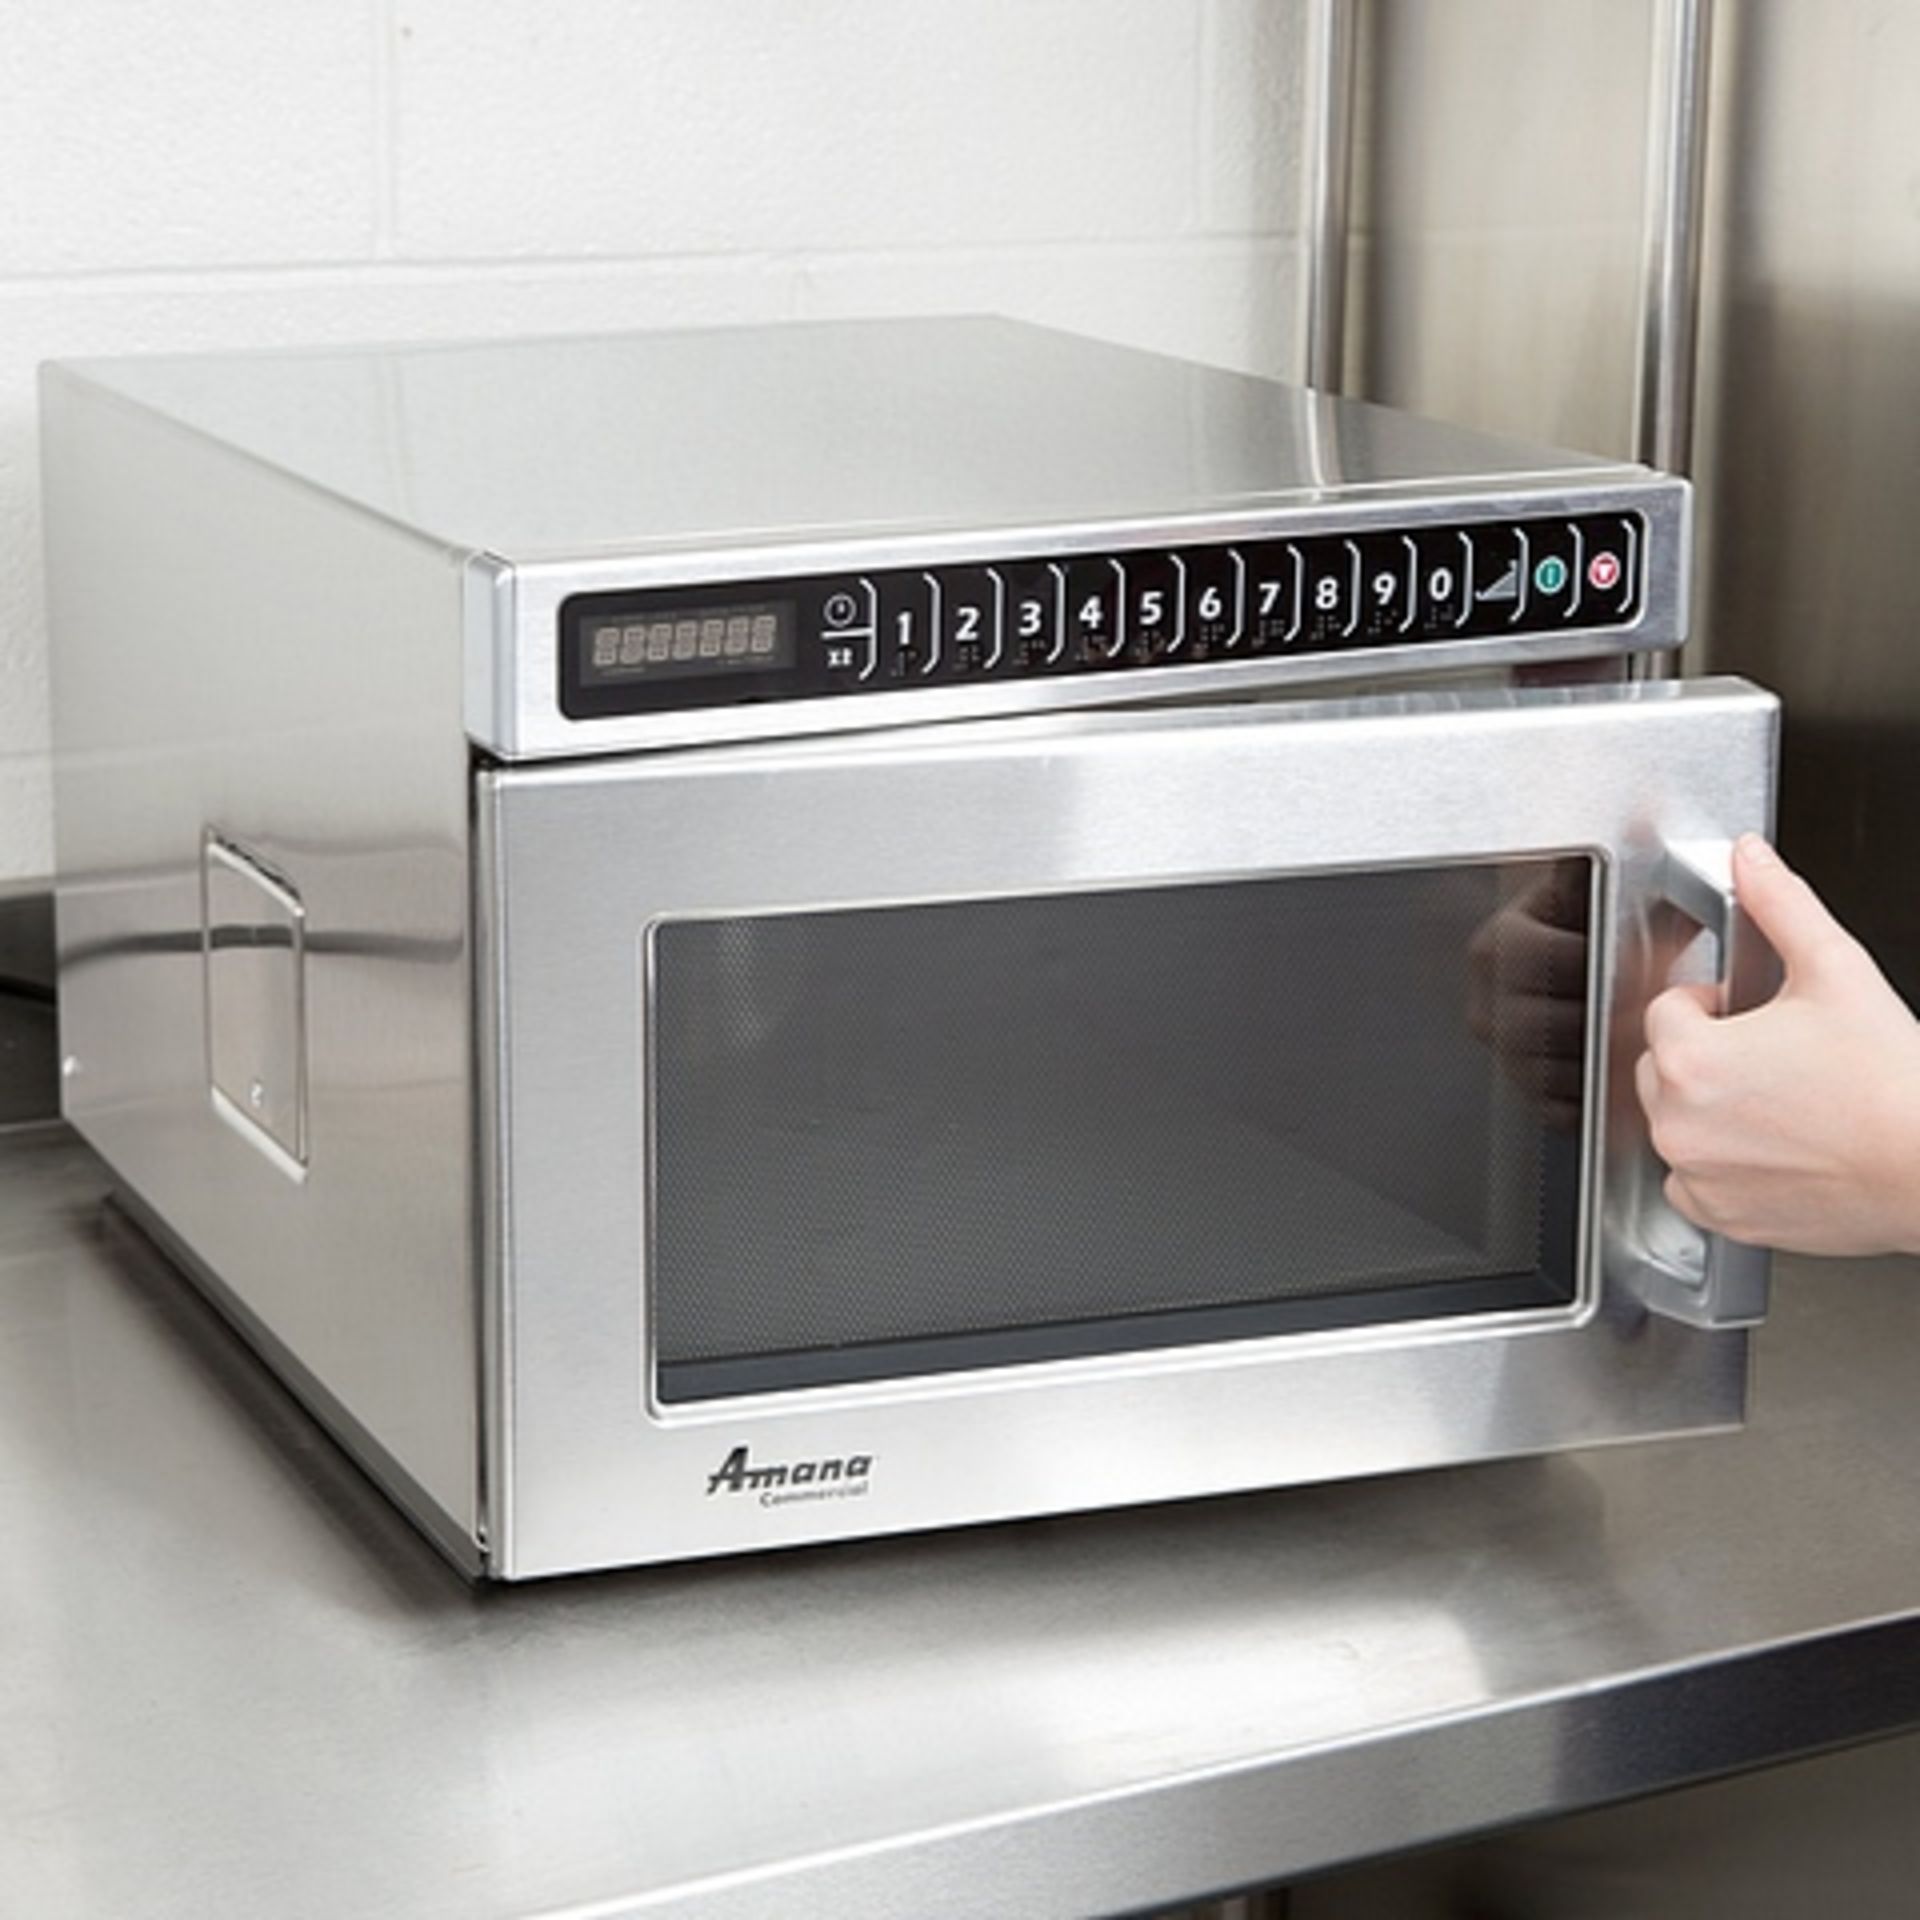 Amana UHDC514 1400 Watt stainless steel heavy duty compact microwave 11 power levels 100 program